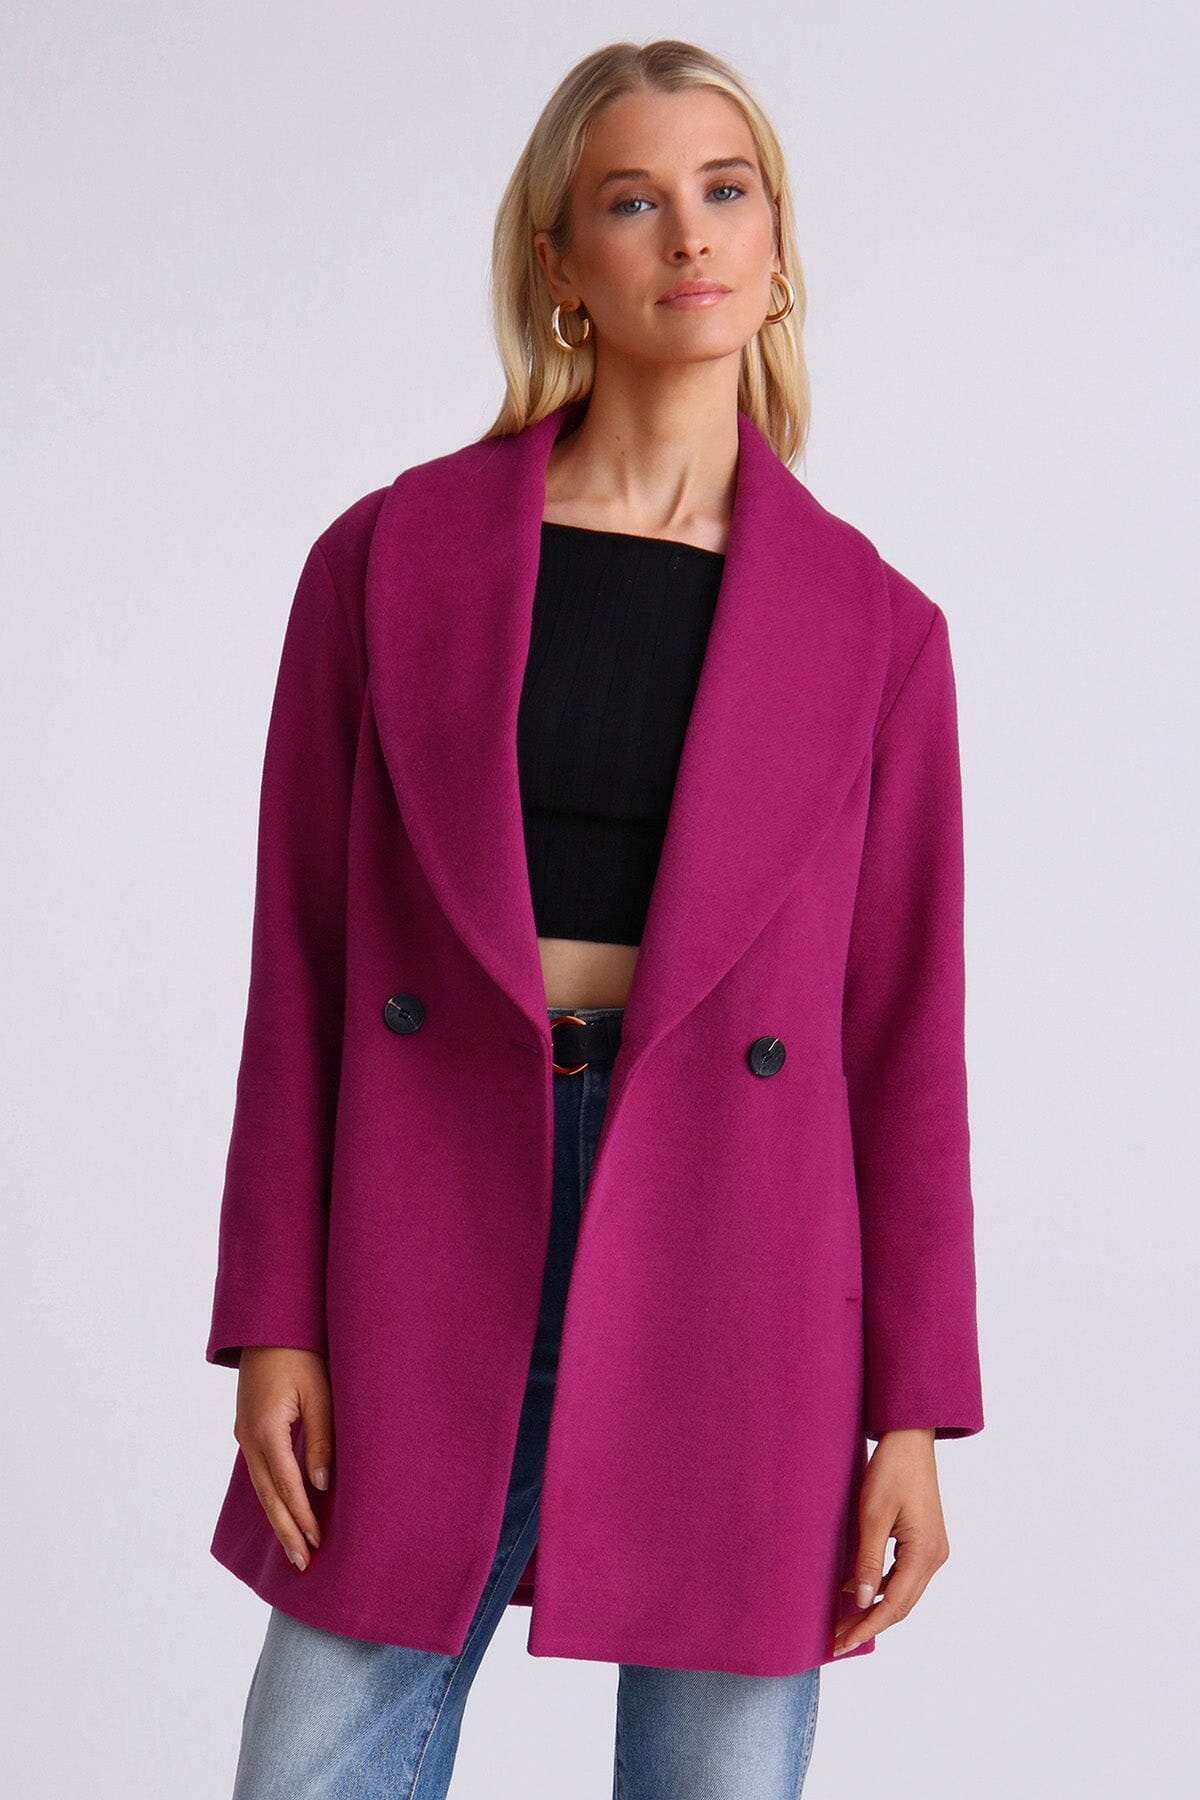 Berry Purple shawl collar twill peacoat coat - women's figure flattering cute work appropriate coats outerwear for fall 2023